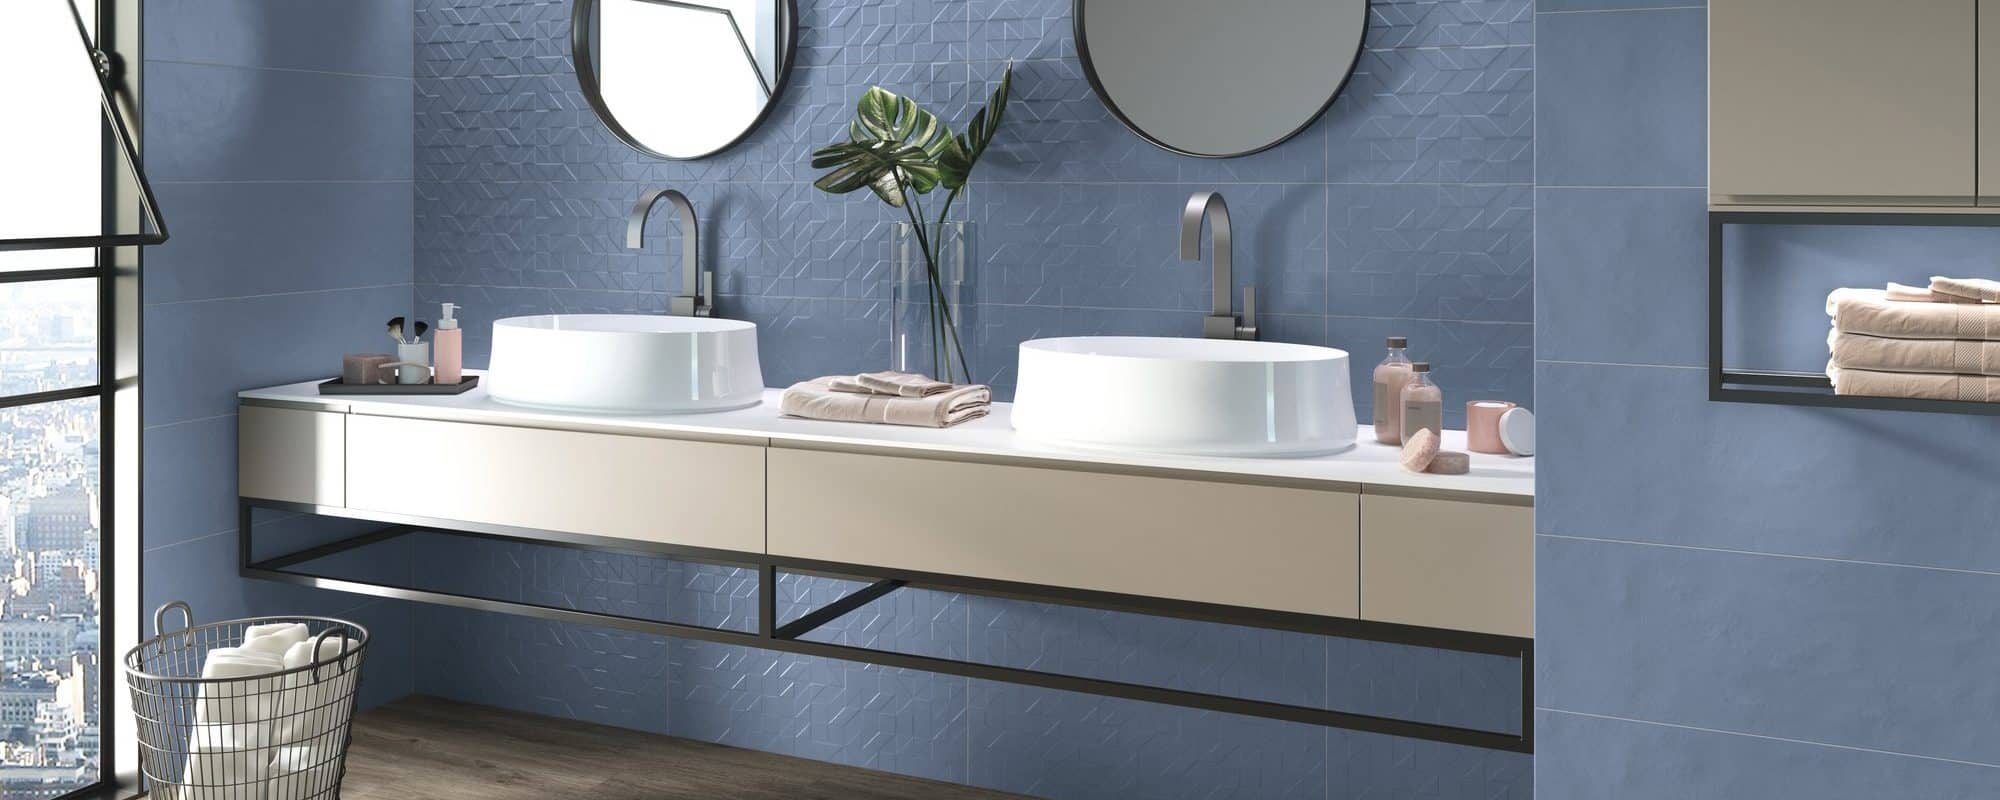 KLEN cement effect porcelain bathroom tiles uk slider 7